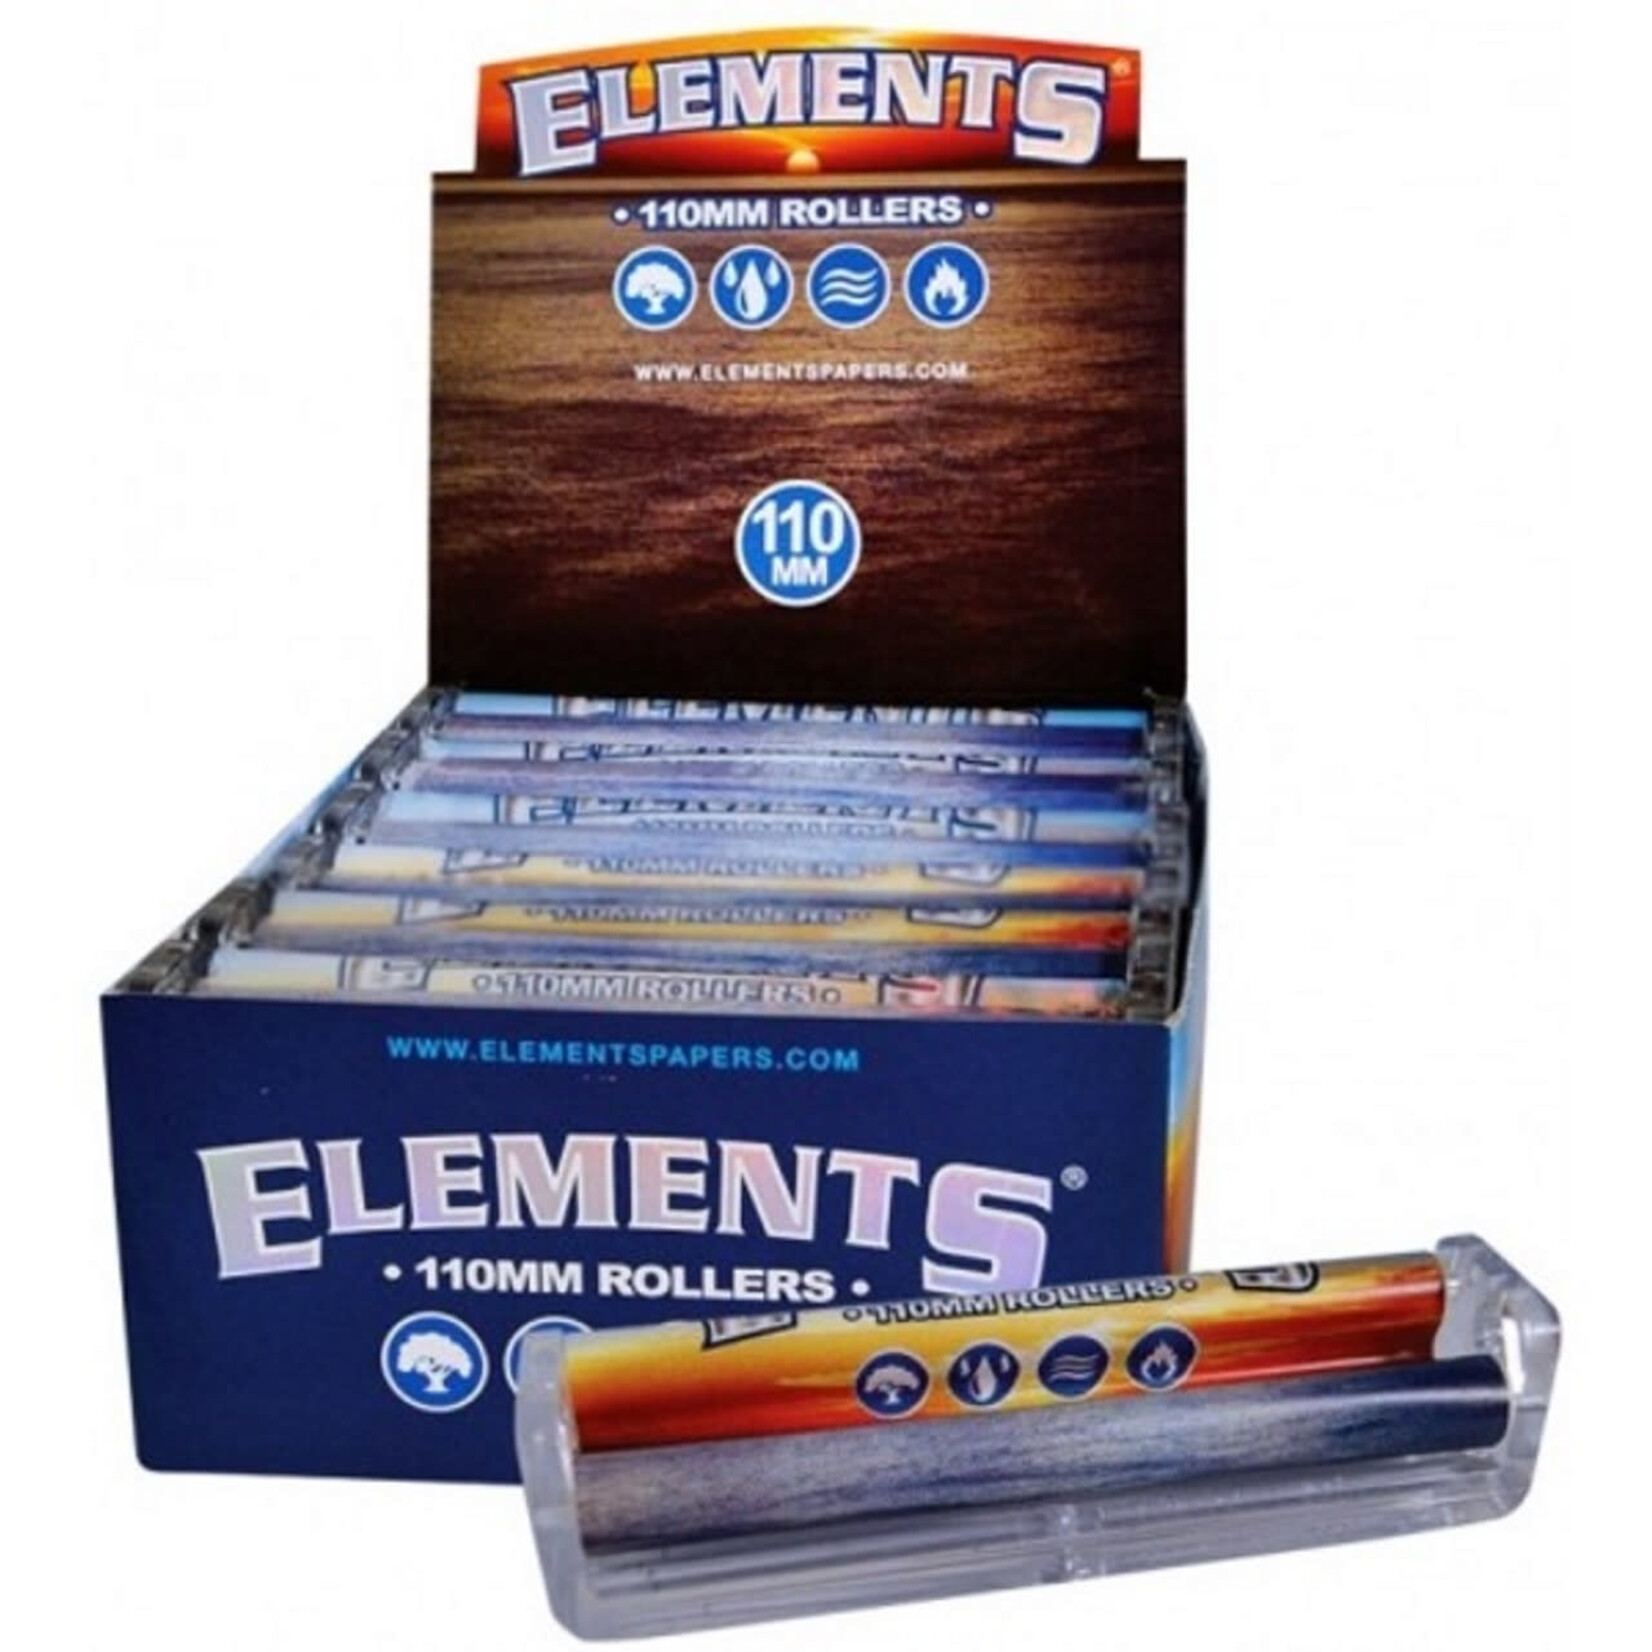 Elements Elements 110mm Roller